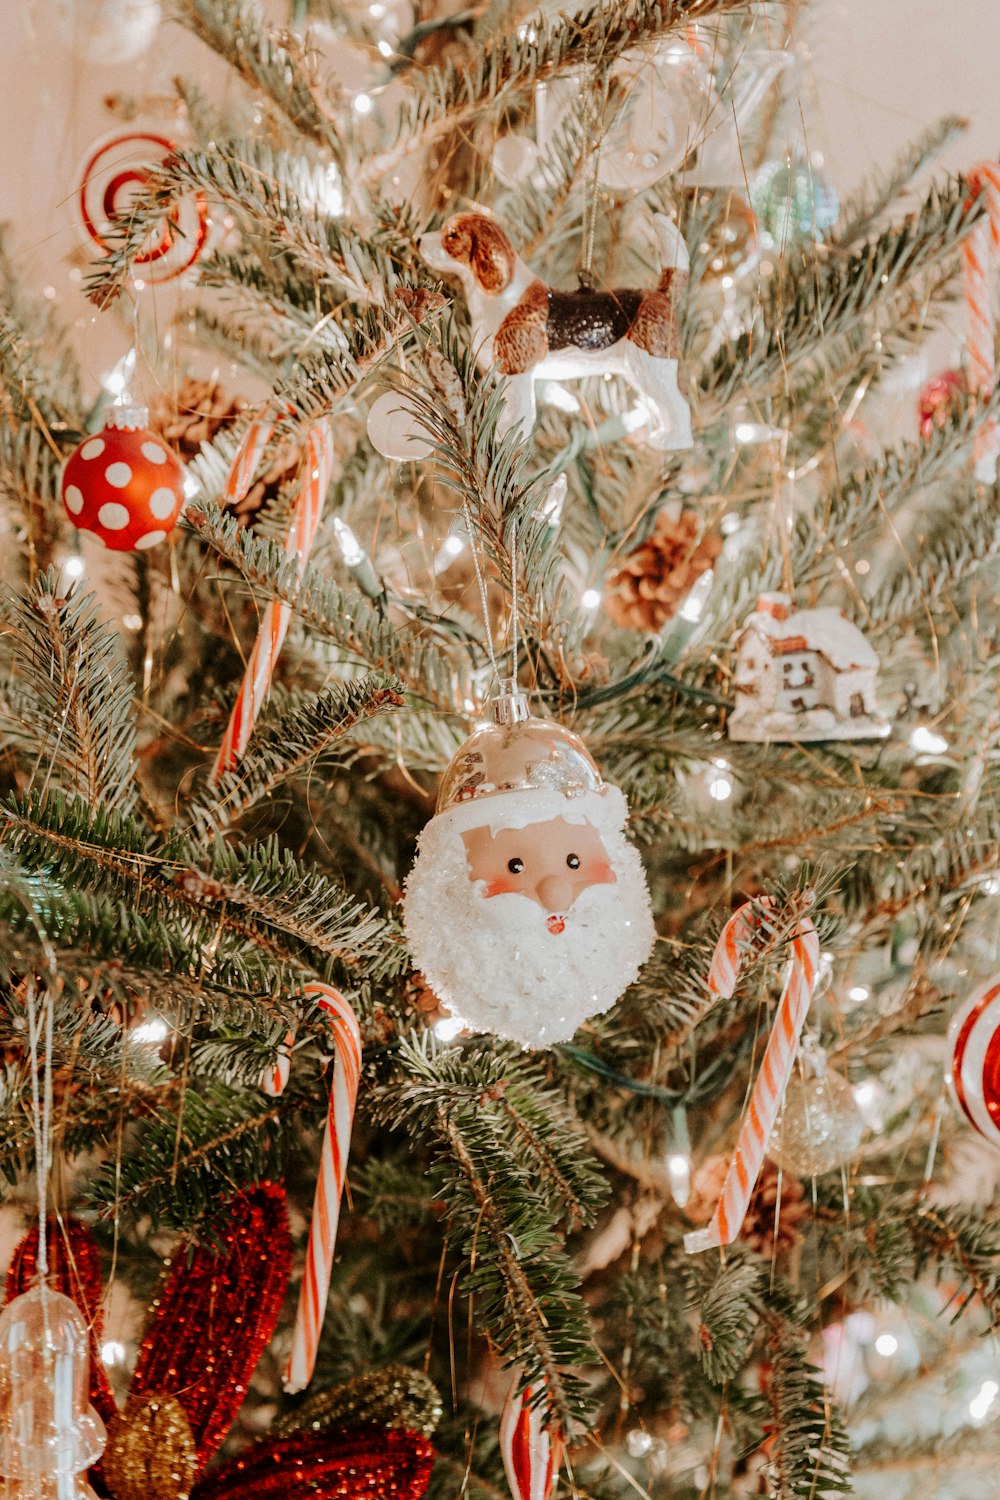 Santa Claus head Christmas tree decor